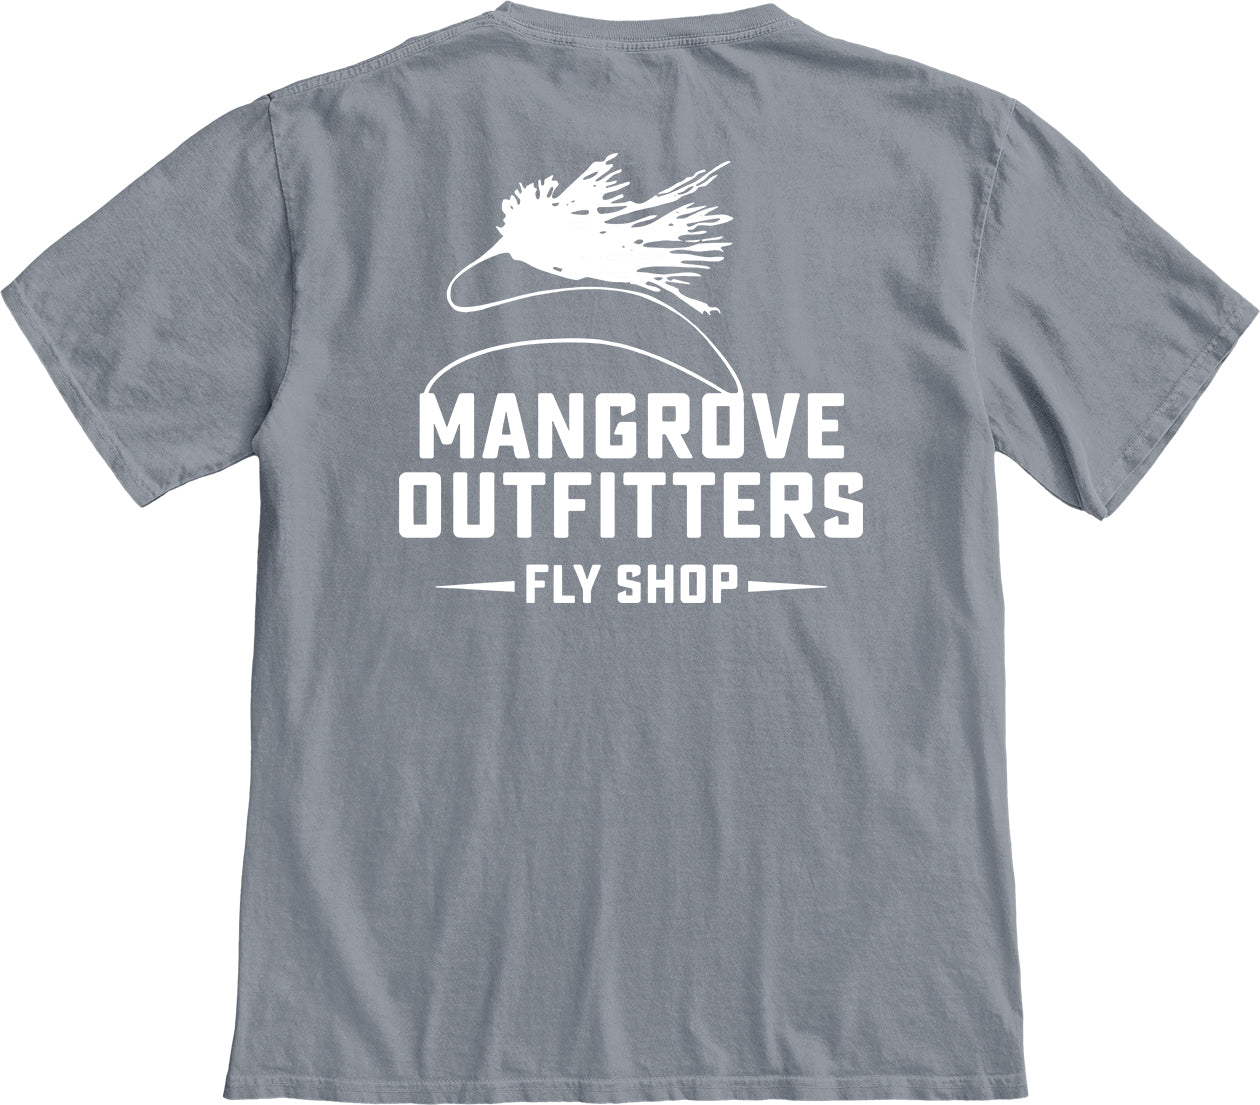 Mangrove Outfitters Shop Shirt